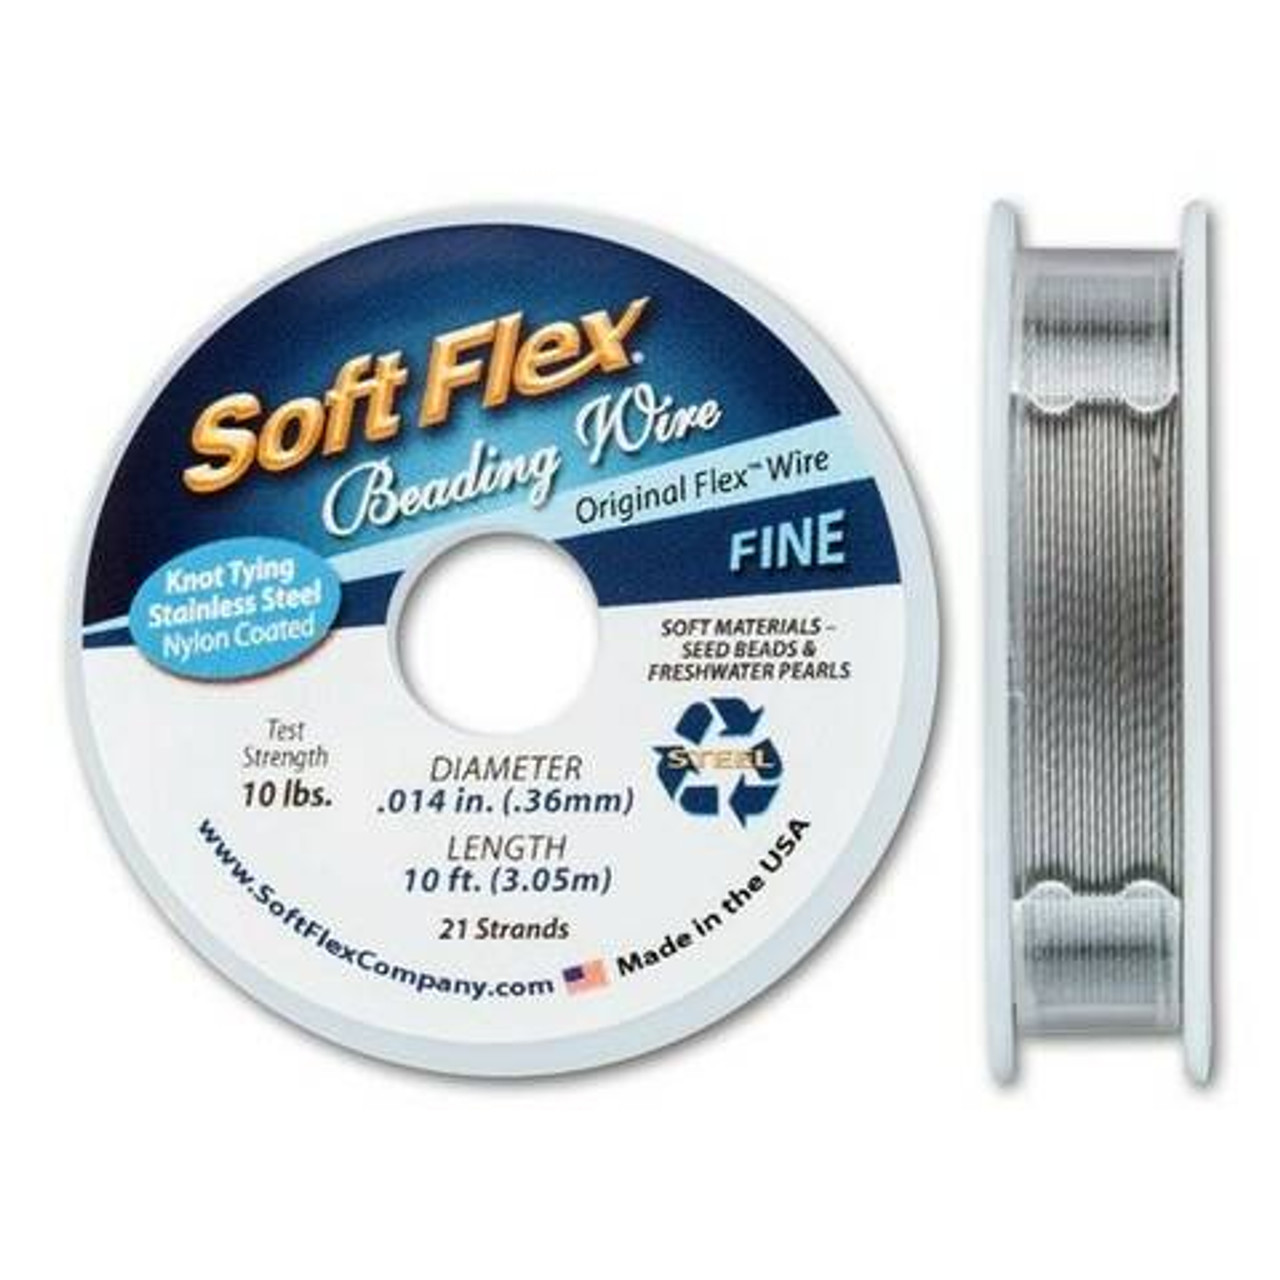 BEADING WIRE 30 Ft Soft Flex Satin Silver FINE .014 21 Strands